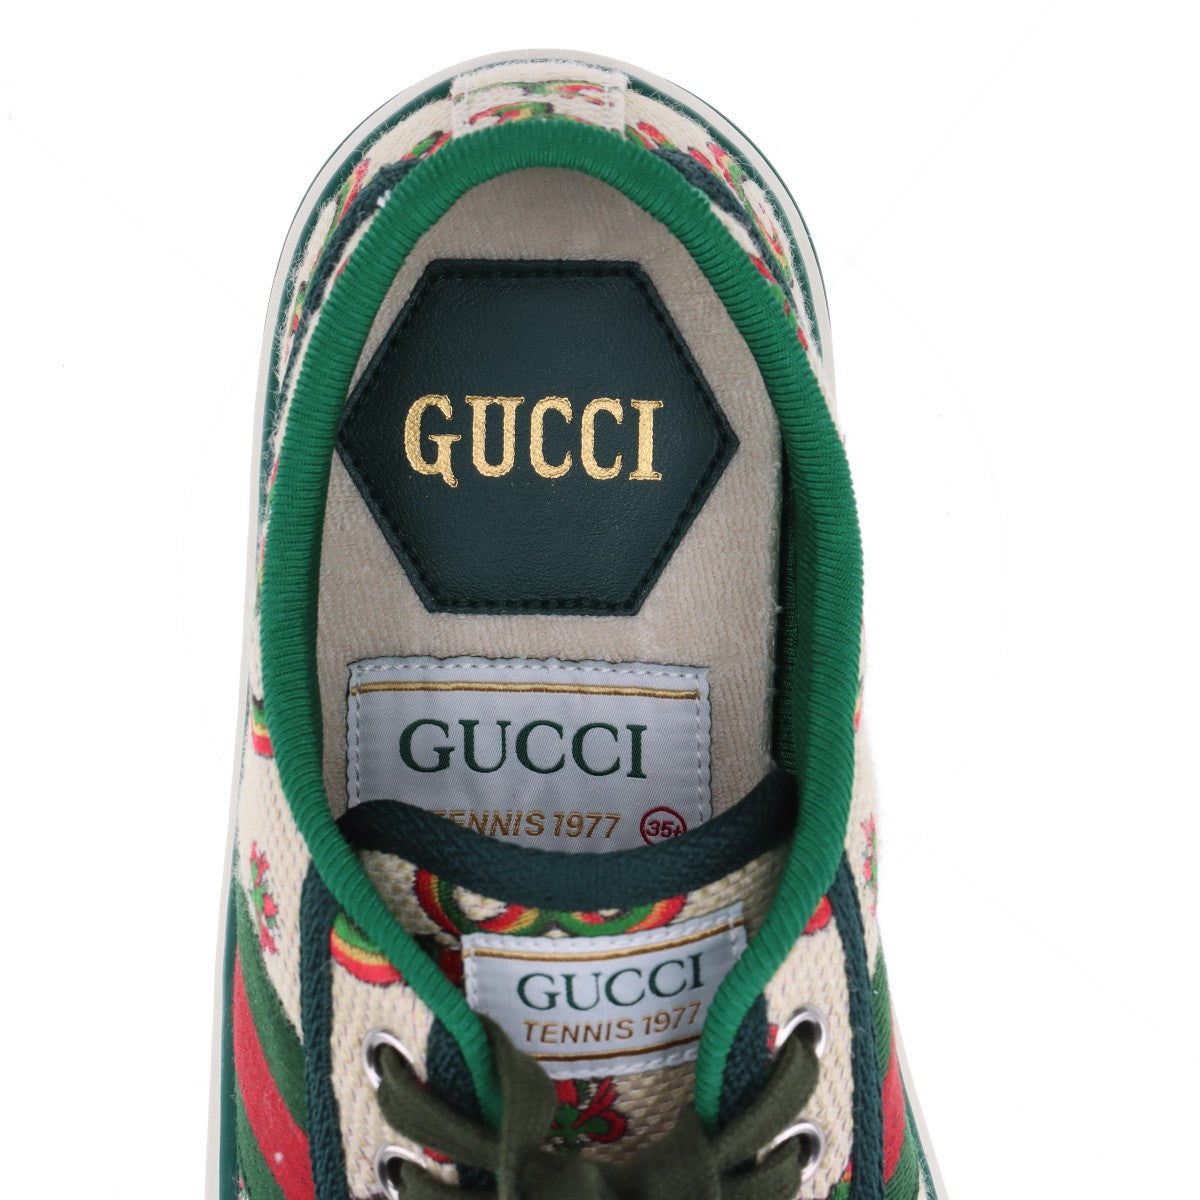 Gucci Tennis 1977 Canvas Sneakers 35.5  Multicolor GG Supreme Flowers 100th Anniversary Celebration   Box  Bag